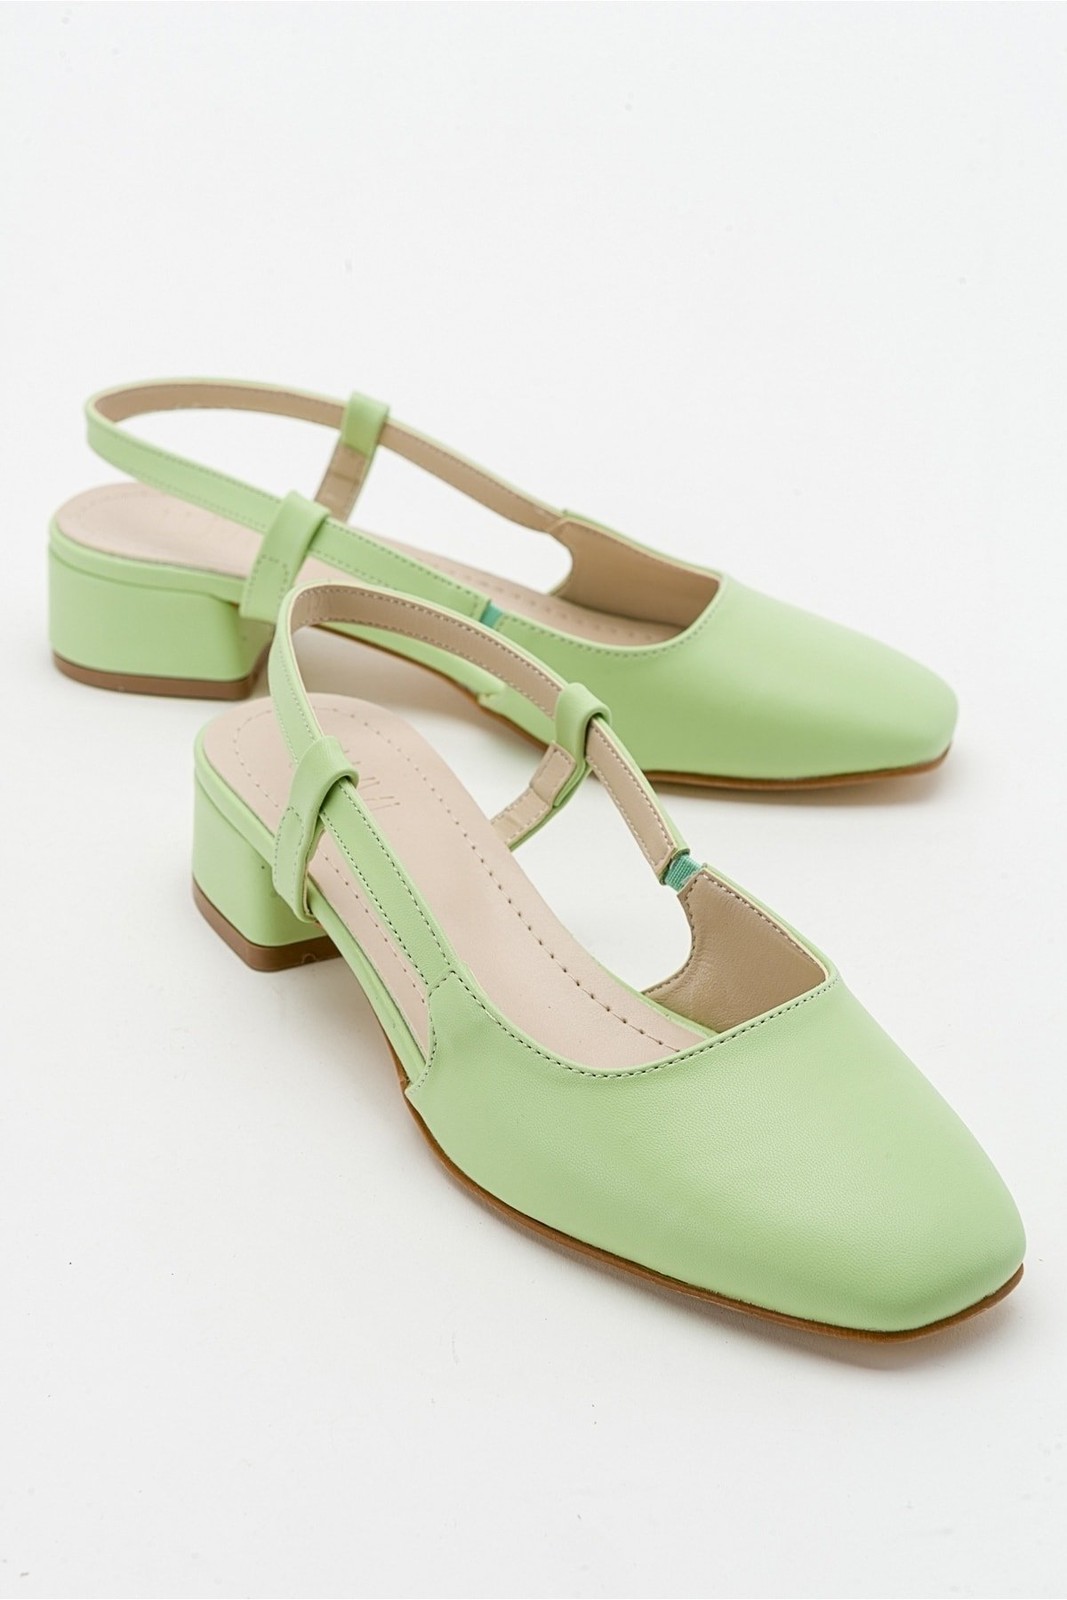 LuviShoes 66 Women's Pistachio Skin Heeled Sandals